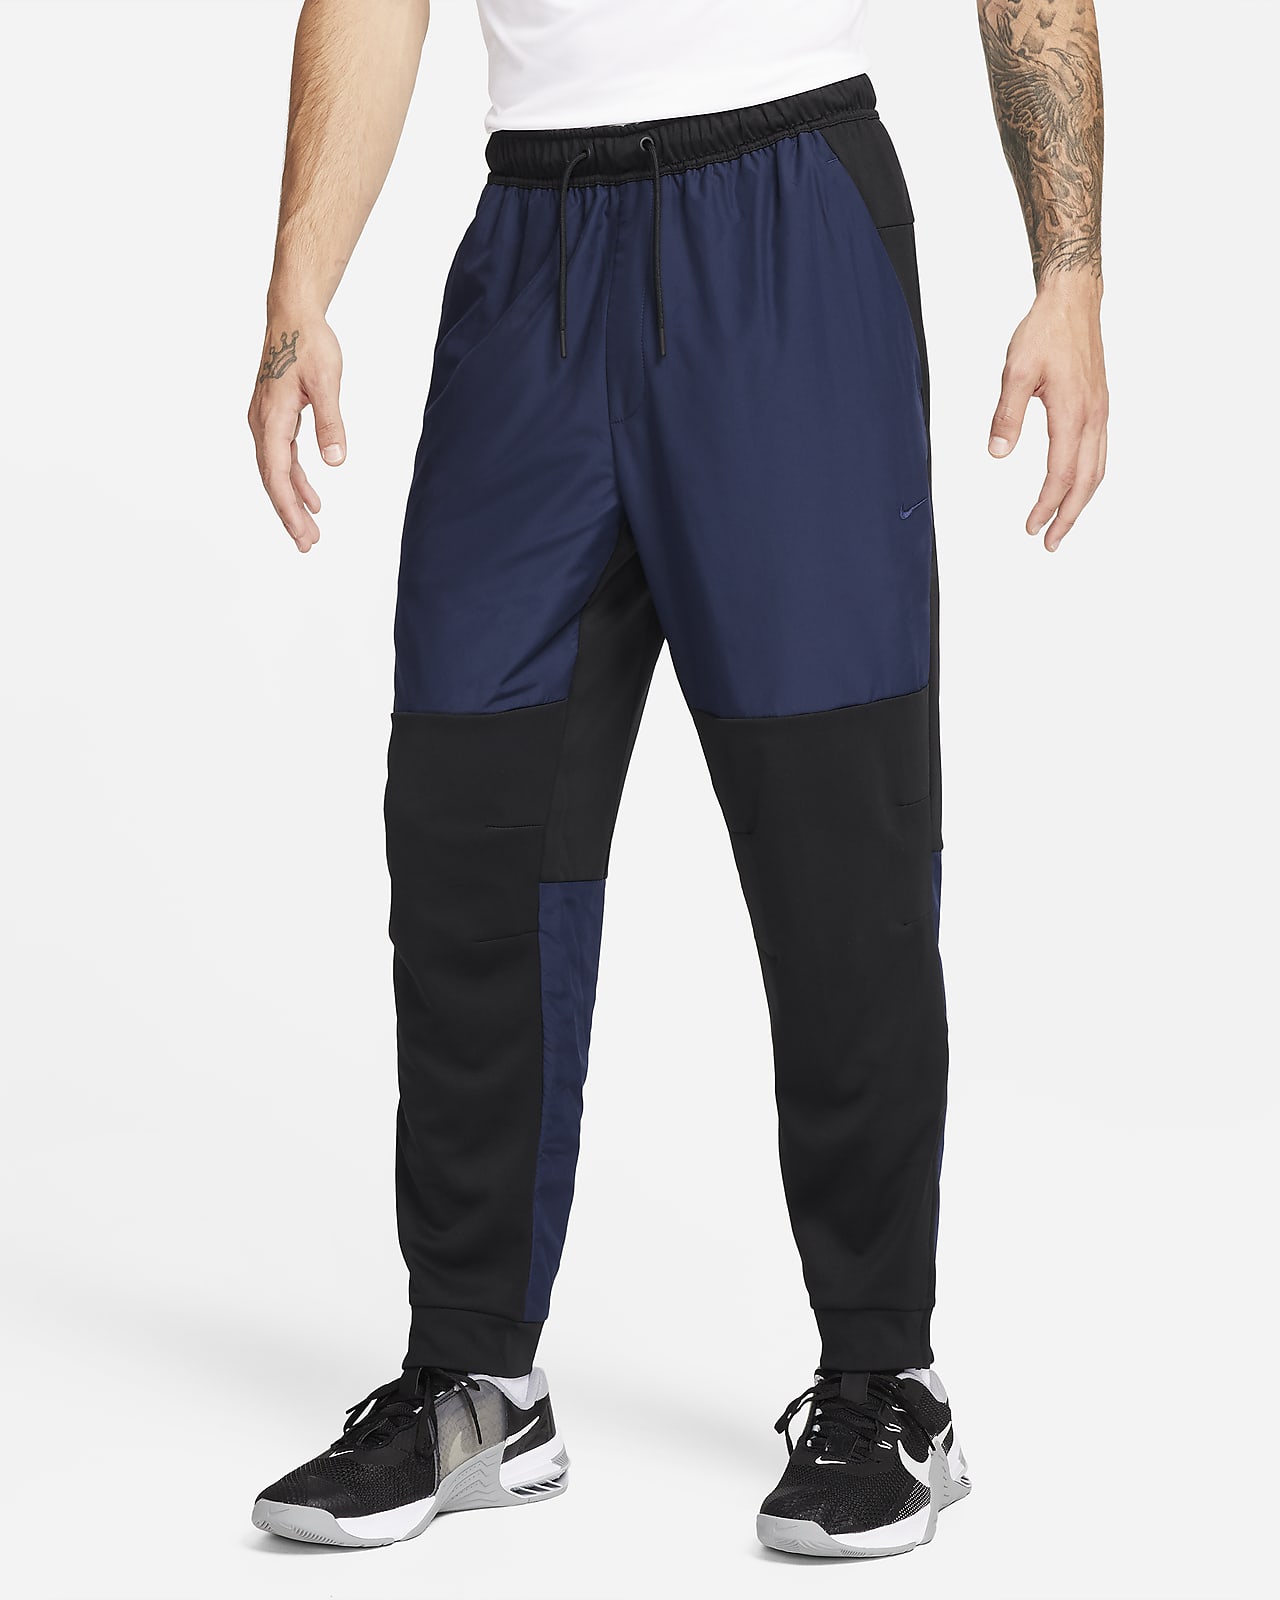 Nike Unlimited Men's Water-Repellent Zippered Cuff Versatile Pants